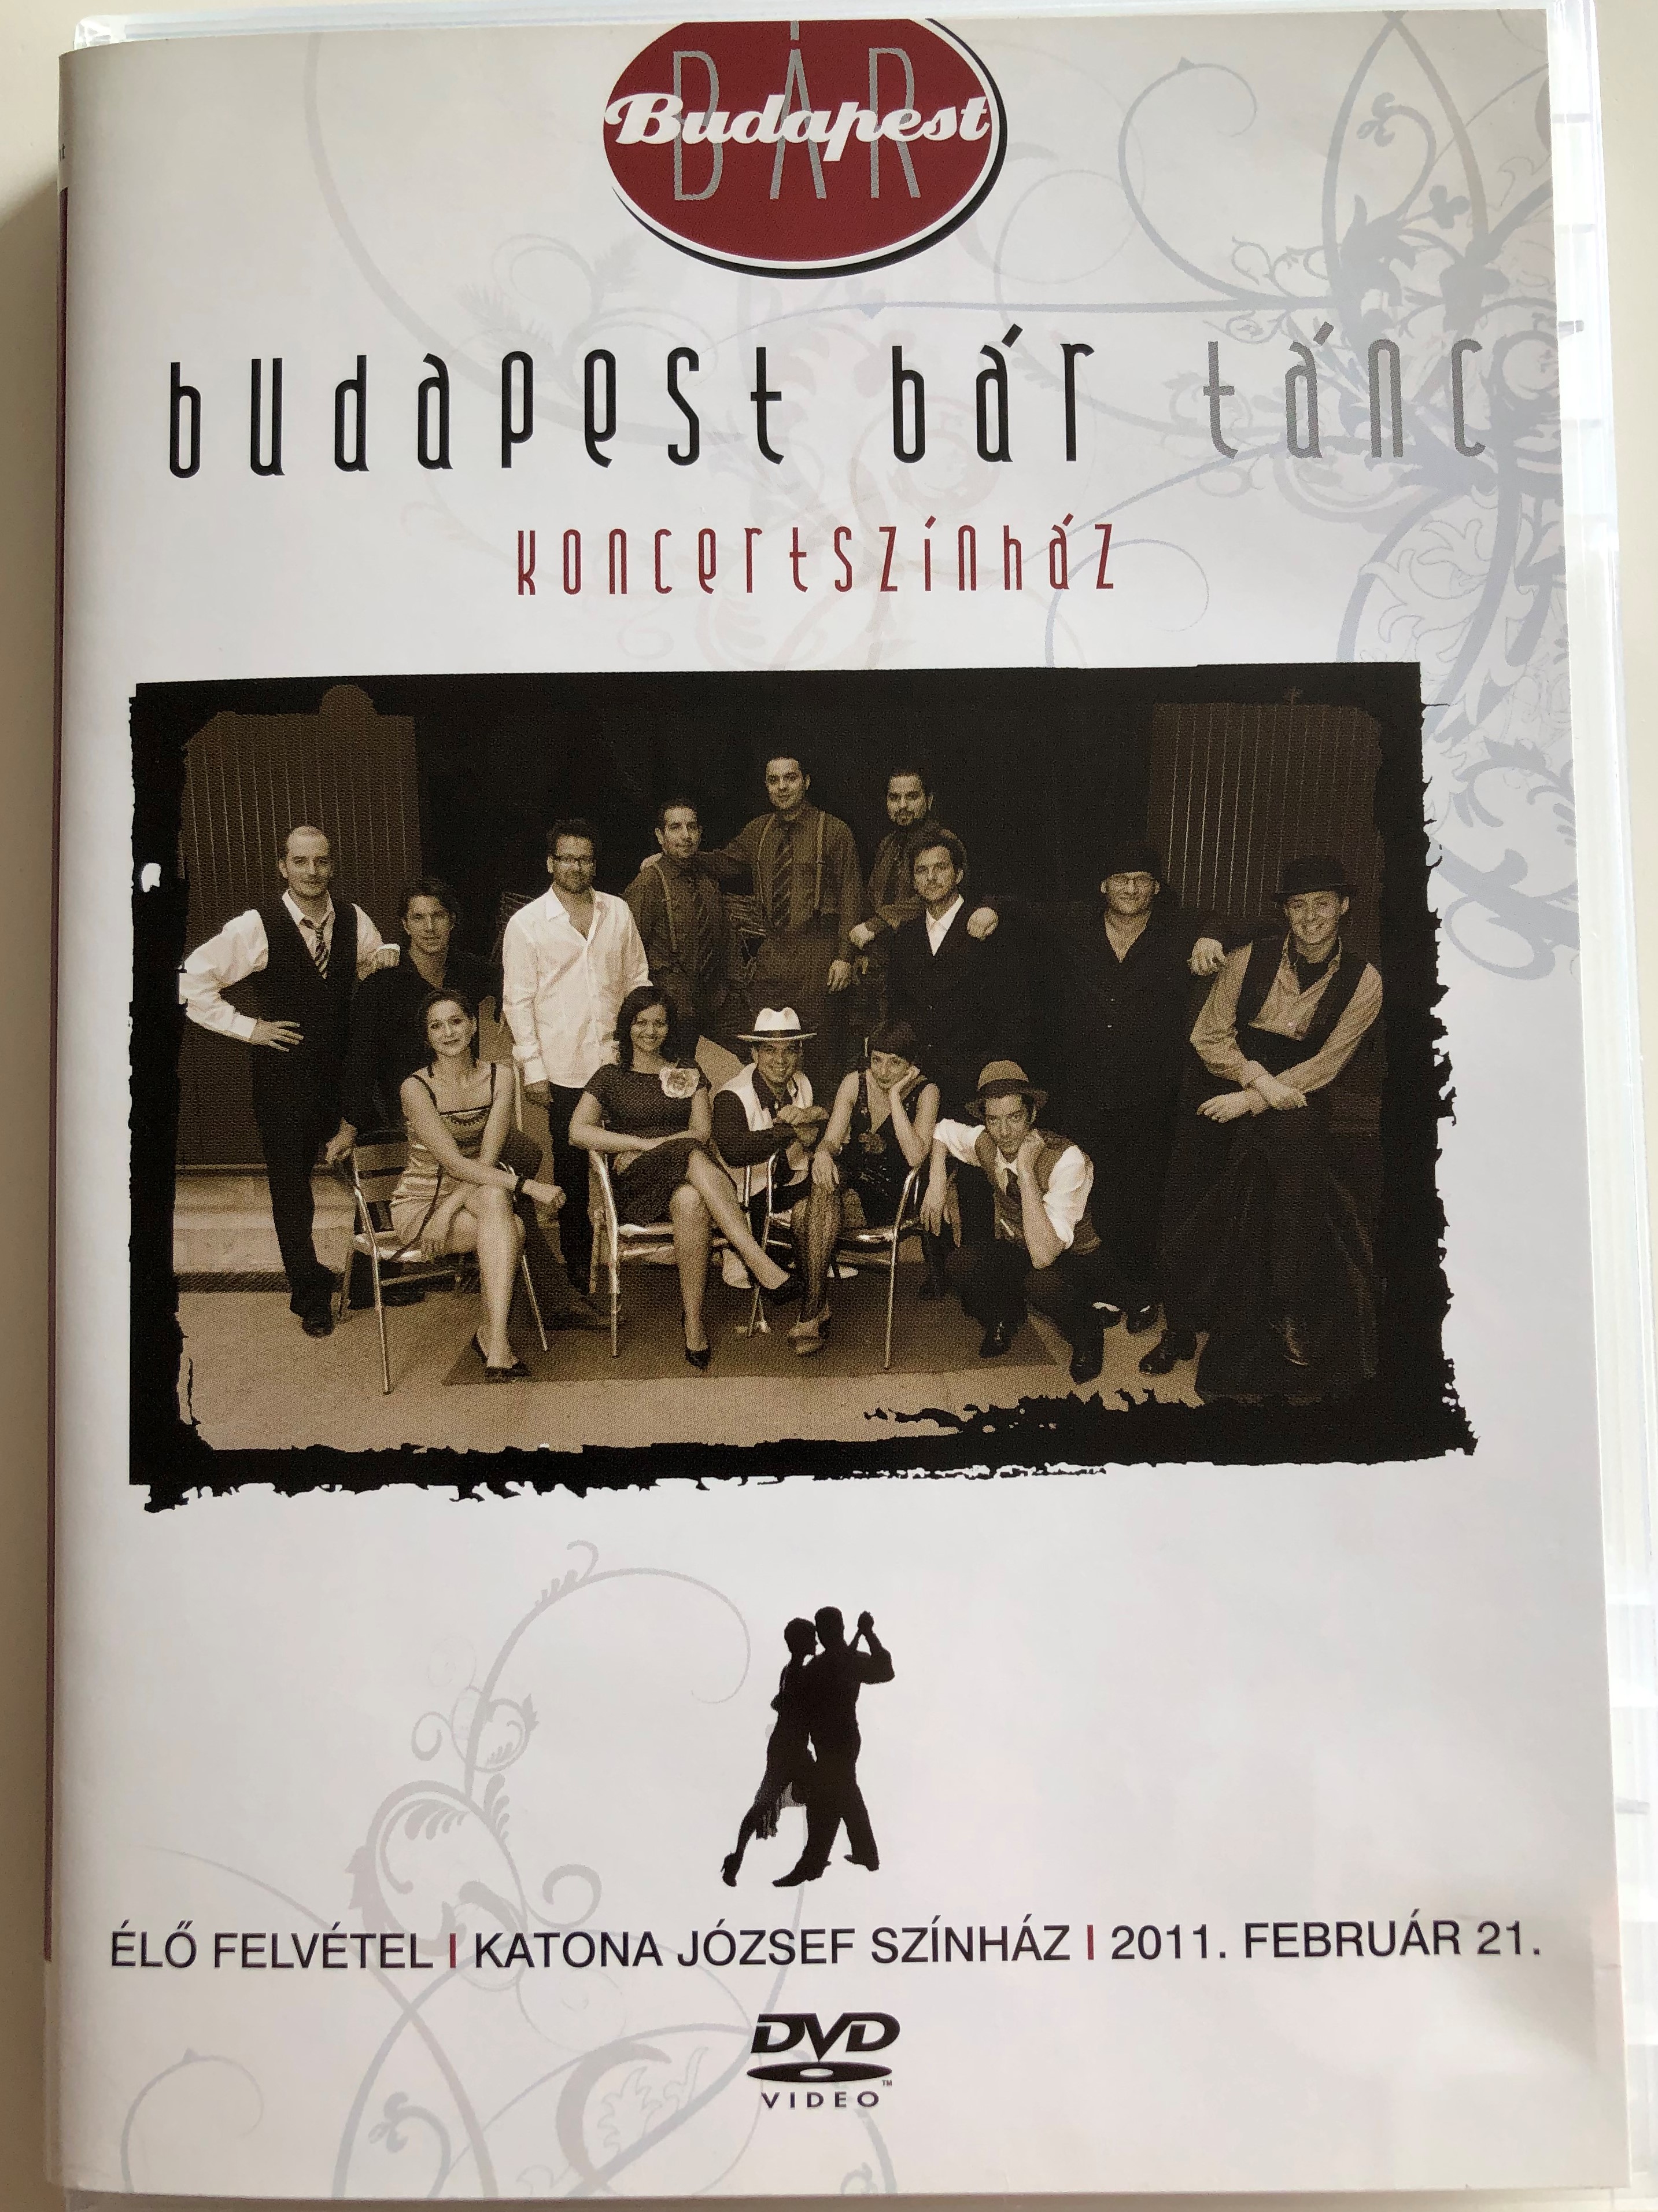 Budapest Bár Tánc - Koncertszínház DVD 2011 / Budapest Bar Dance - Concert  Theater / Live Recording - Katona József Theater 2011 / Sony Music -  bibleinmylanguage